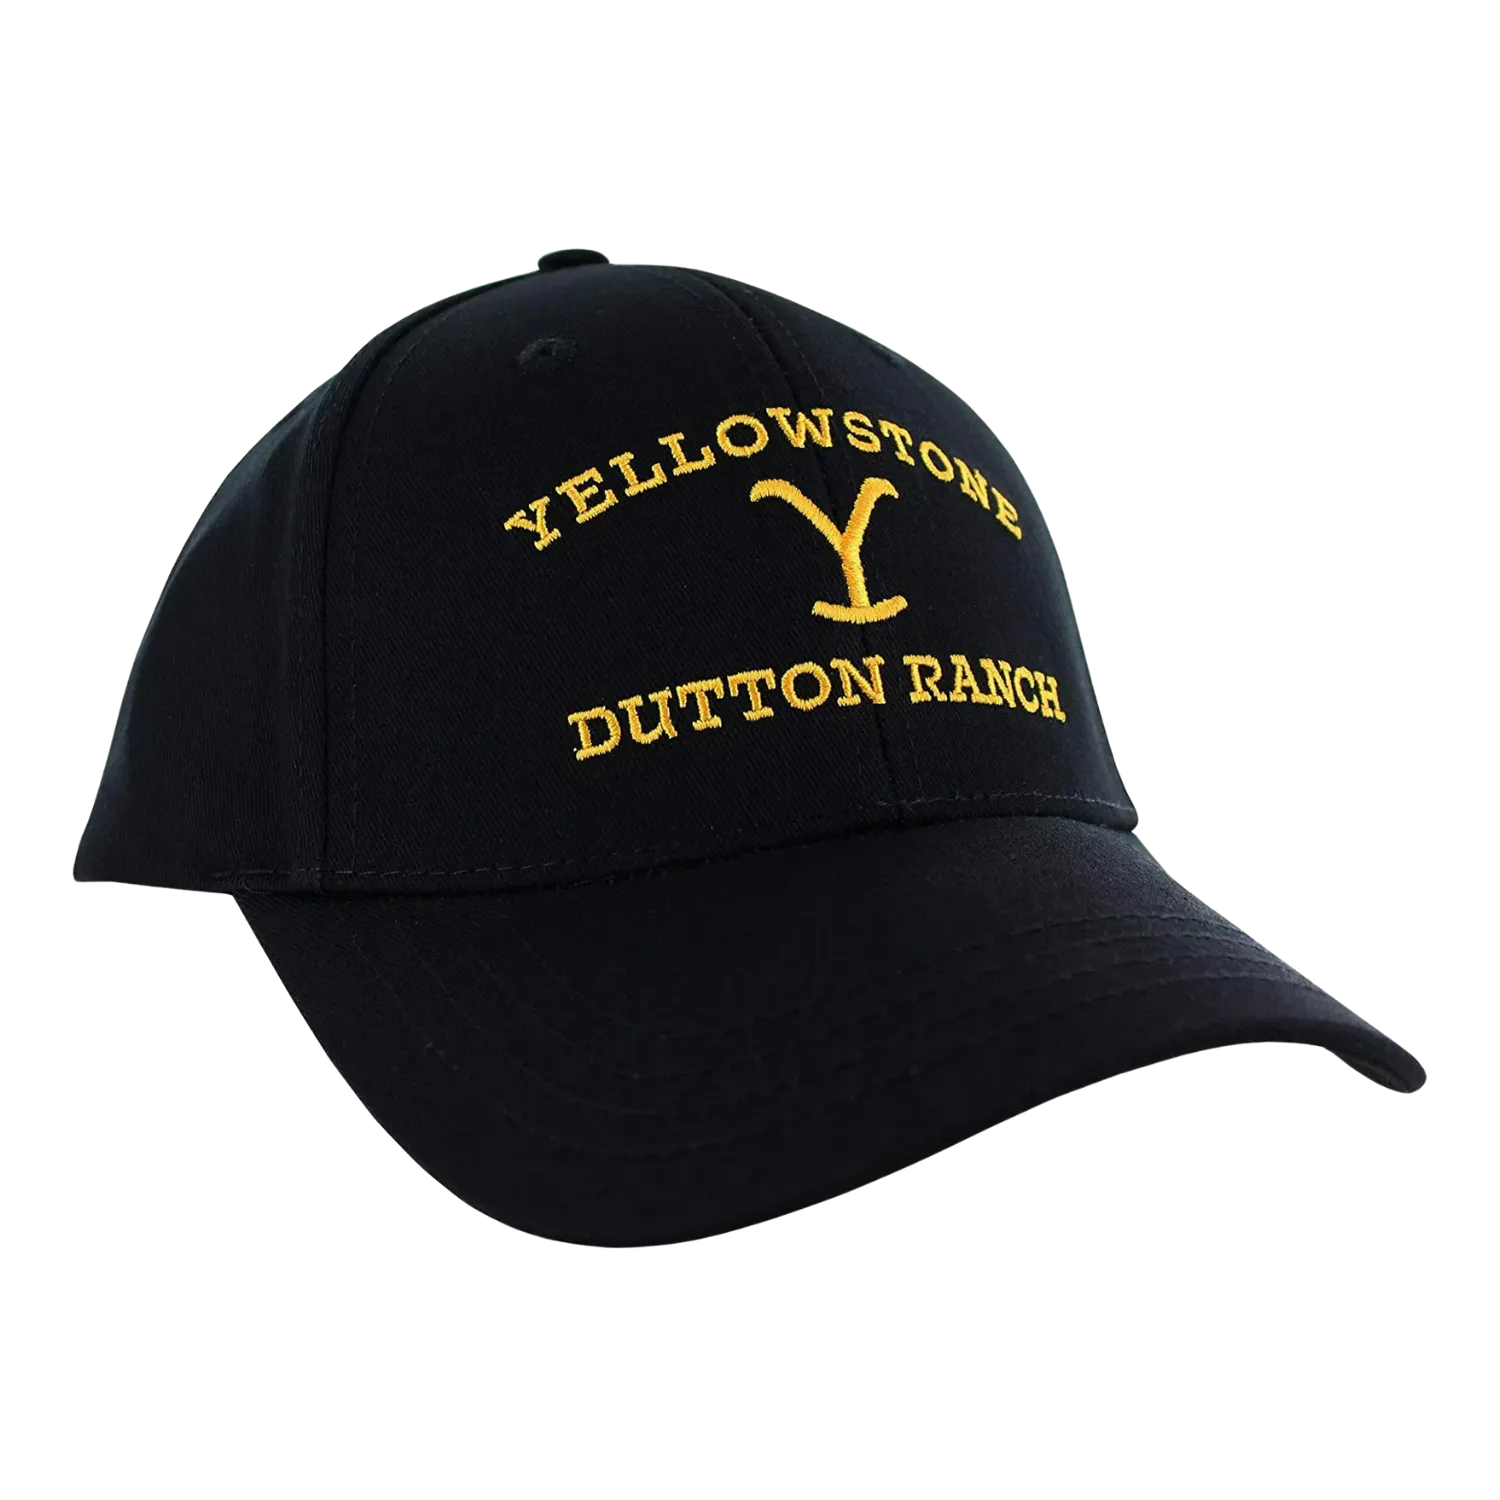 Регулируемая кепка Yellowstone Dutton Ranch